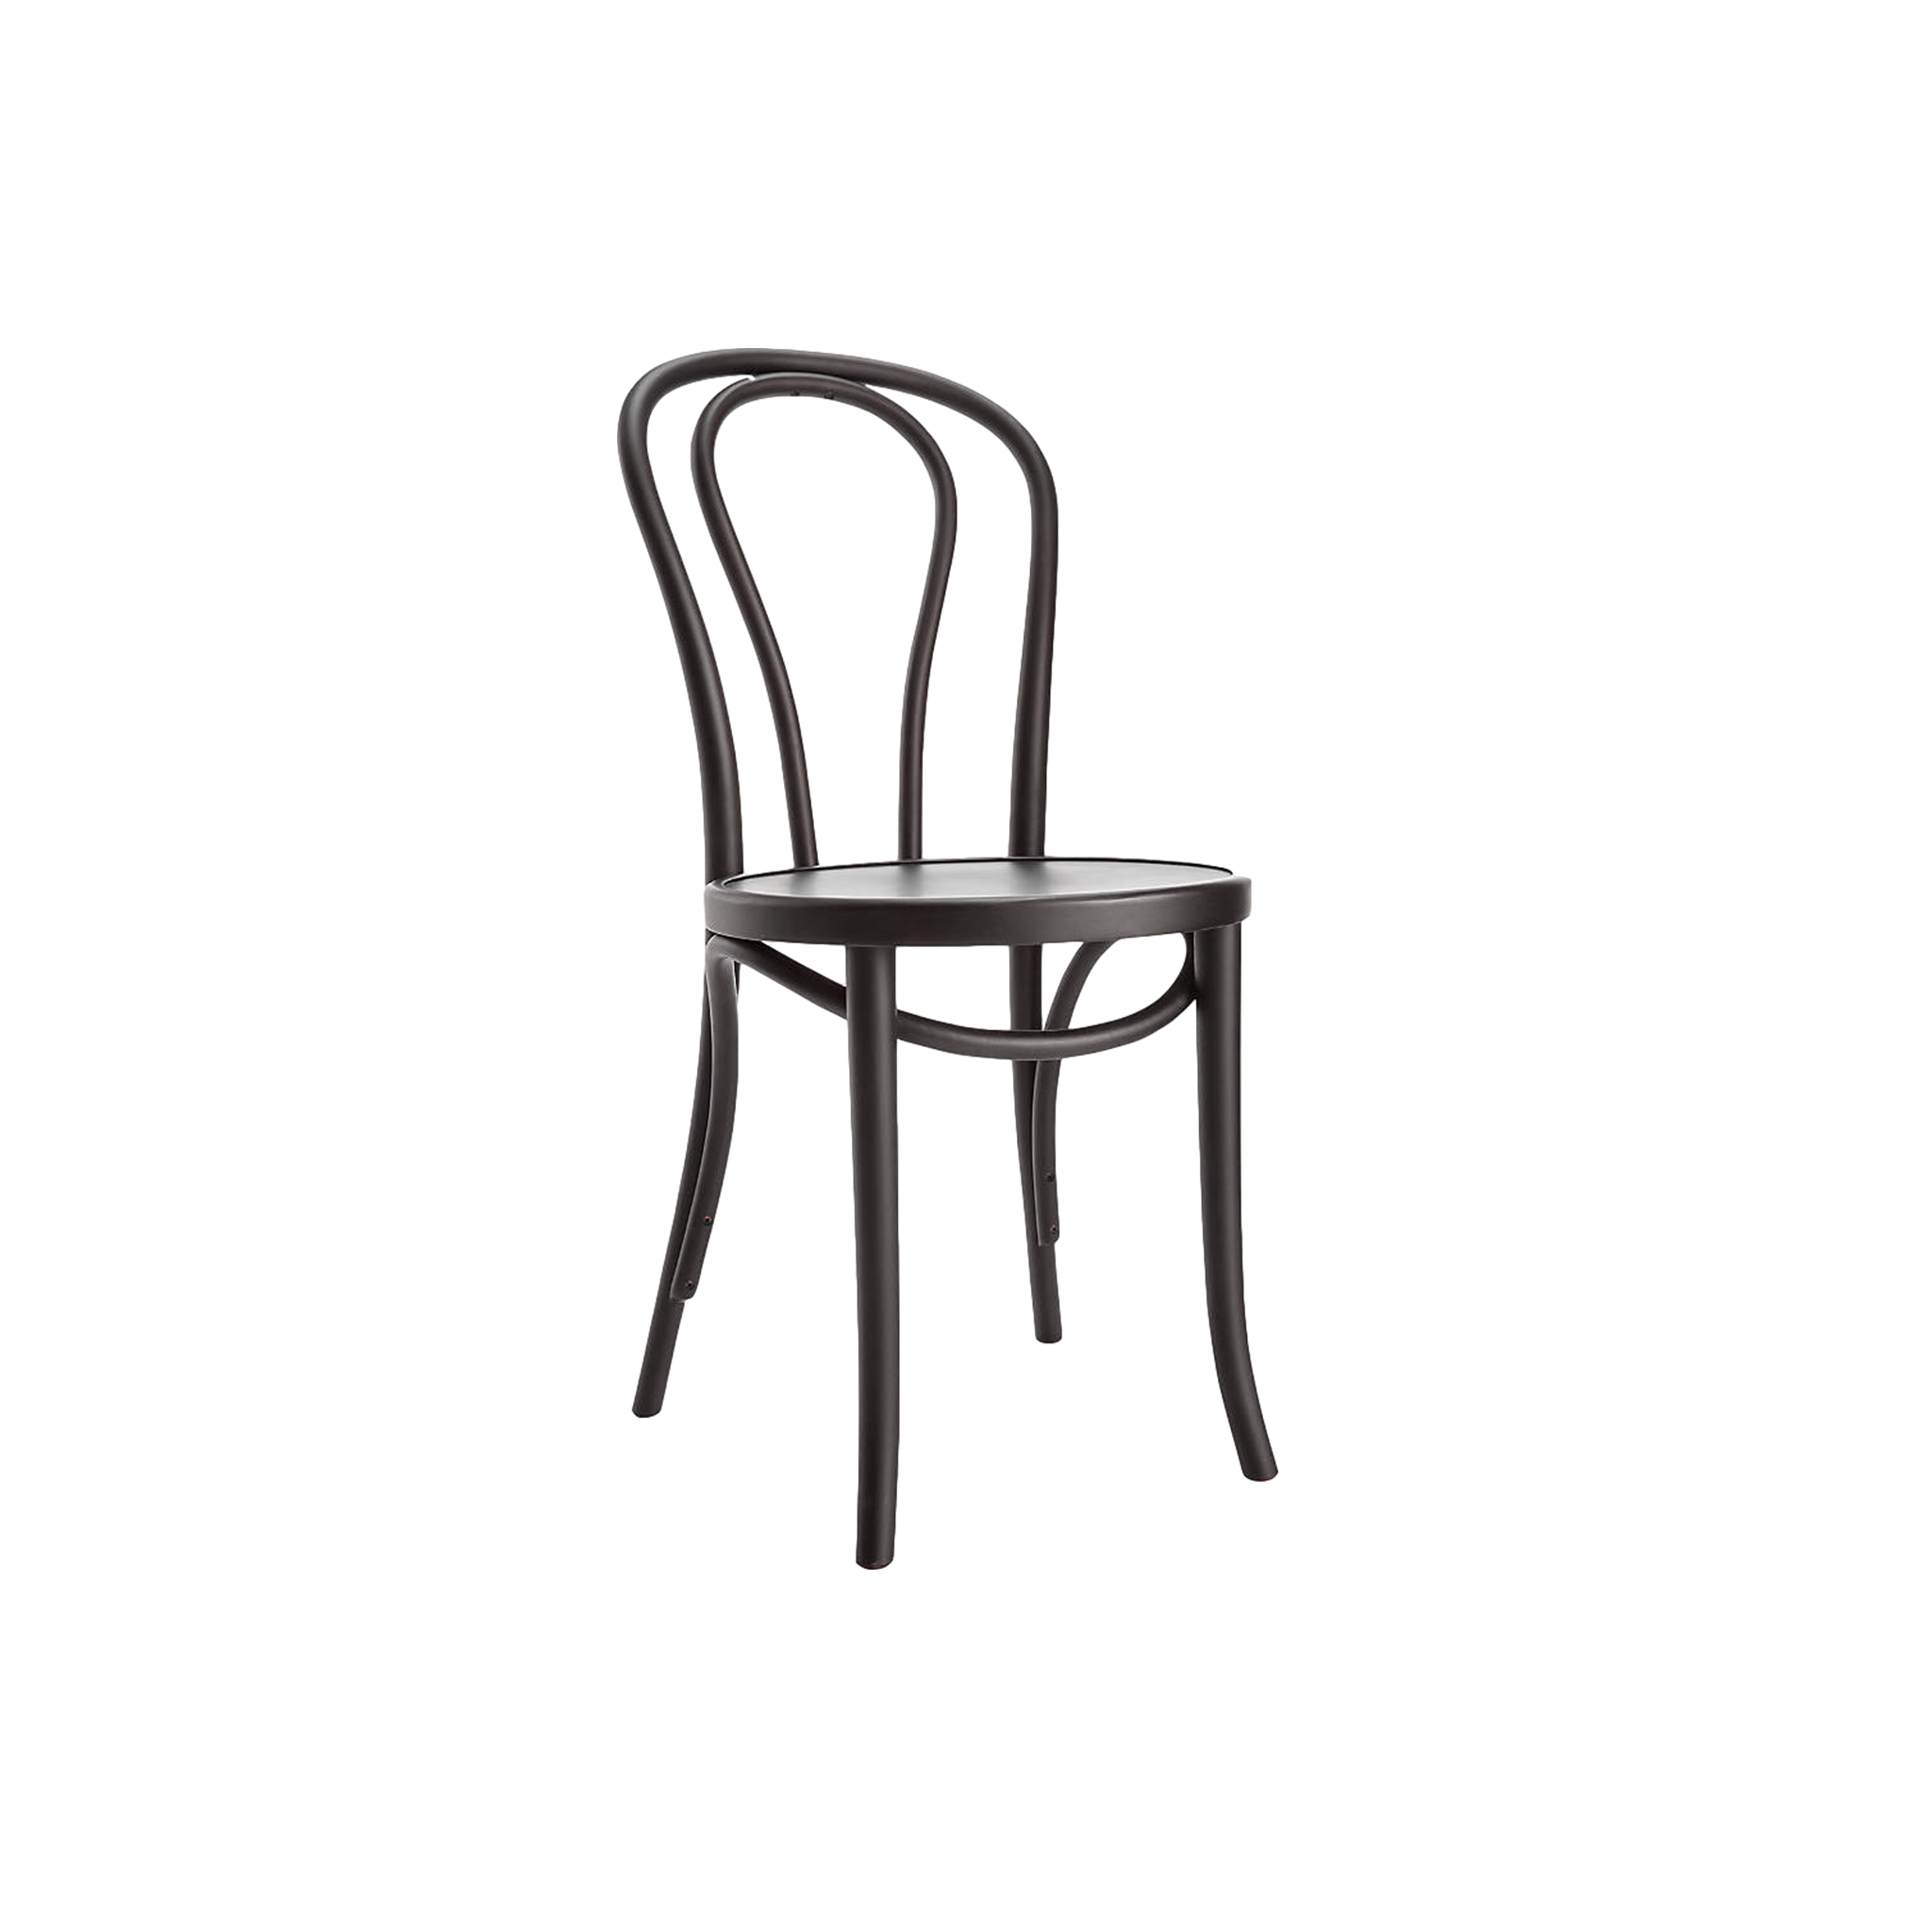 Mercato Chair